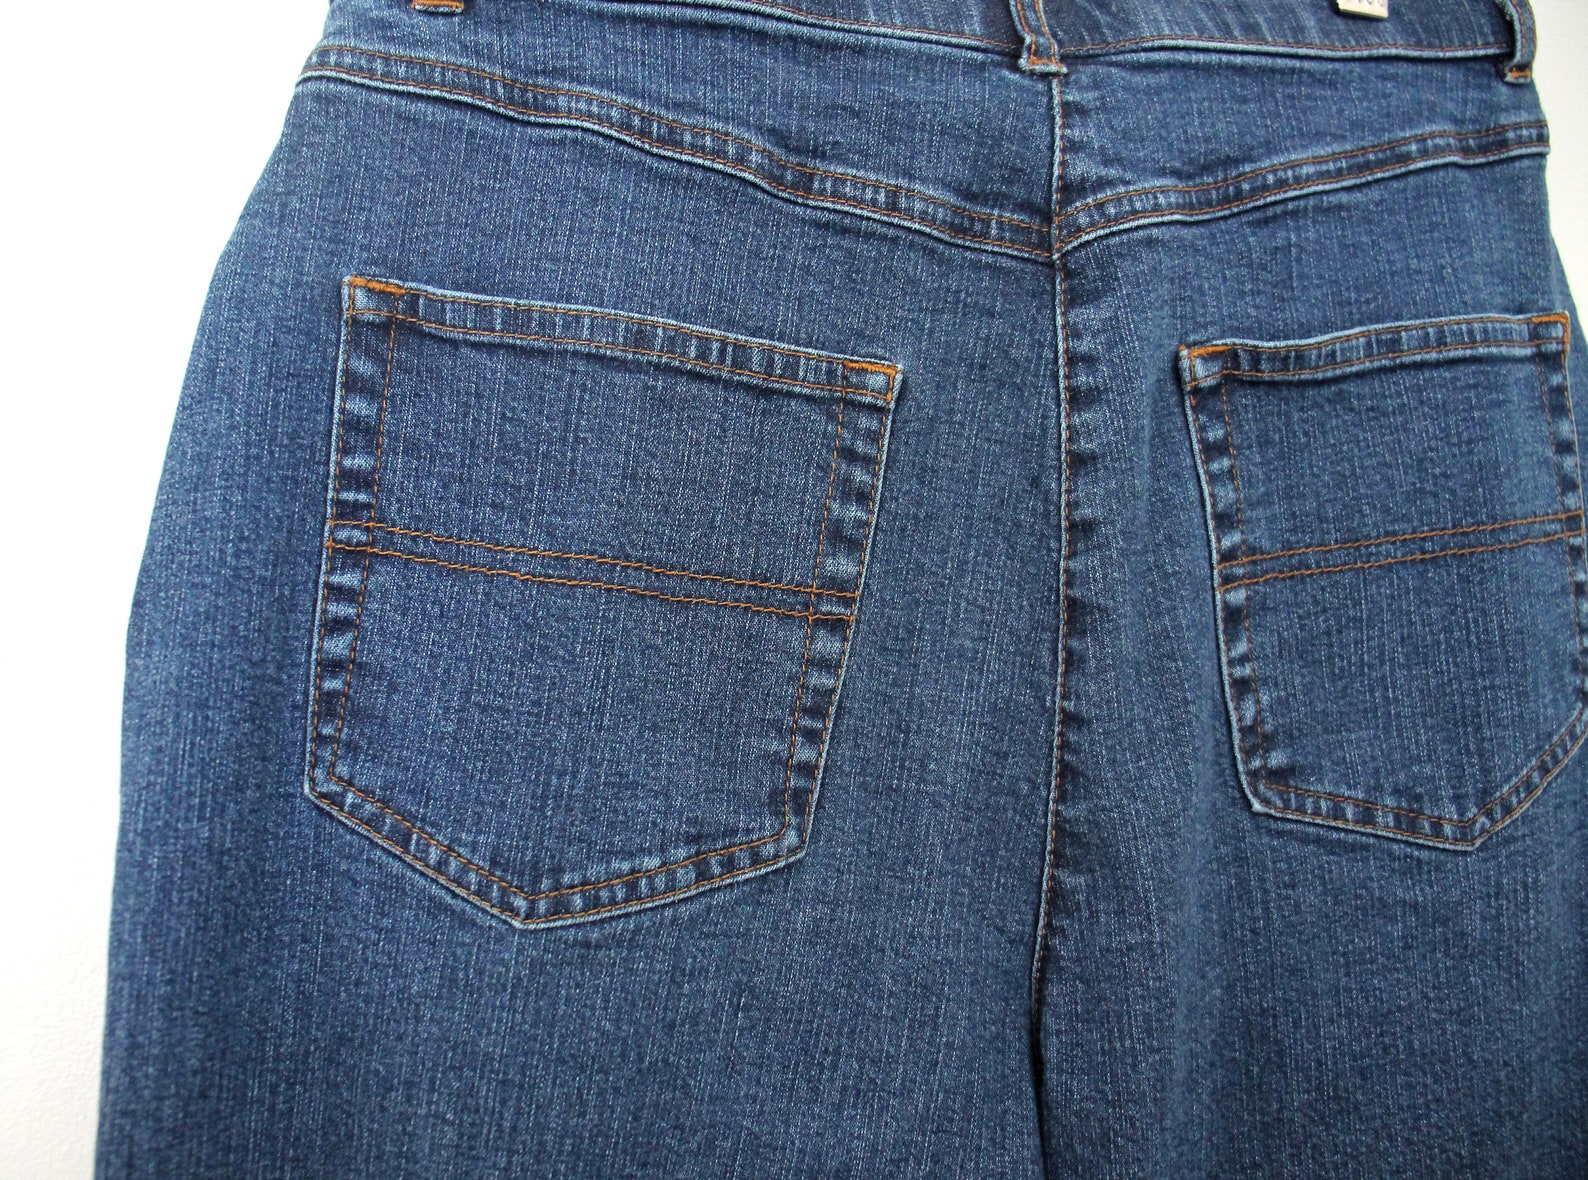 Vintage ALIA jeans high rise straight leg 1990s cotton denim | Etsy